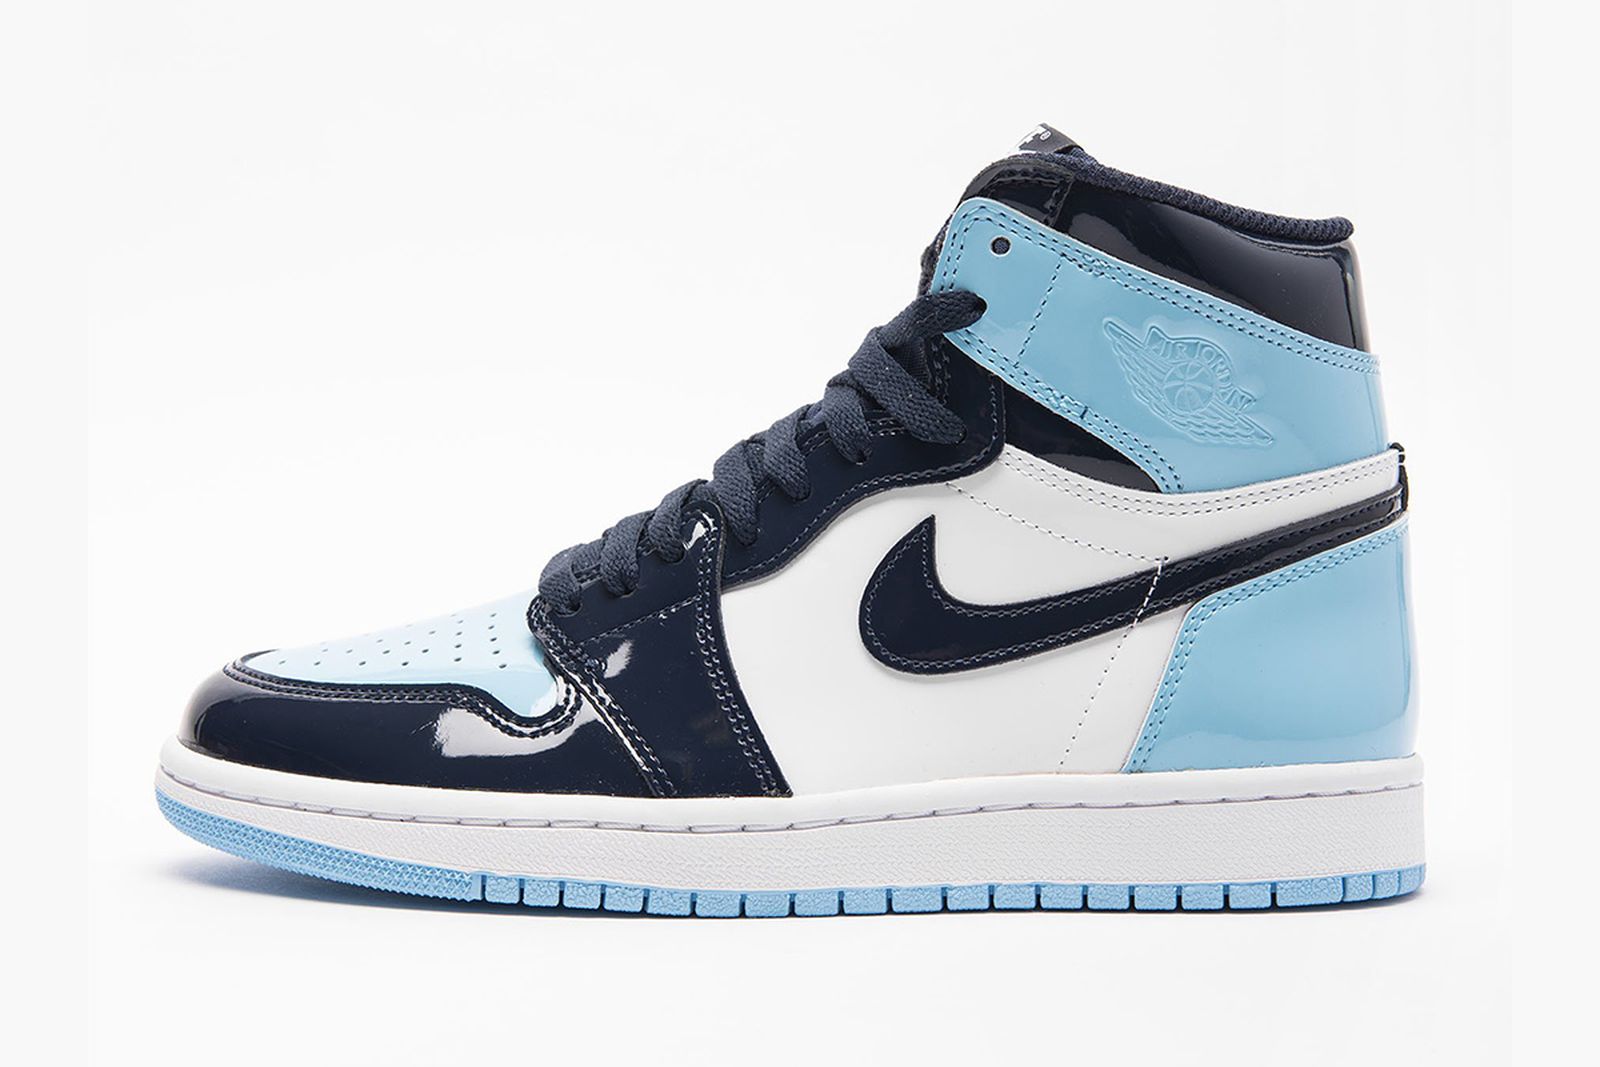 Nike unc blue jordan 1 Air Jordan 1 “UNC” Patent Leather: Where to Buy Today